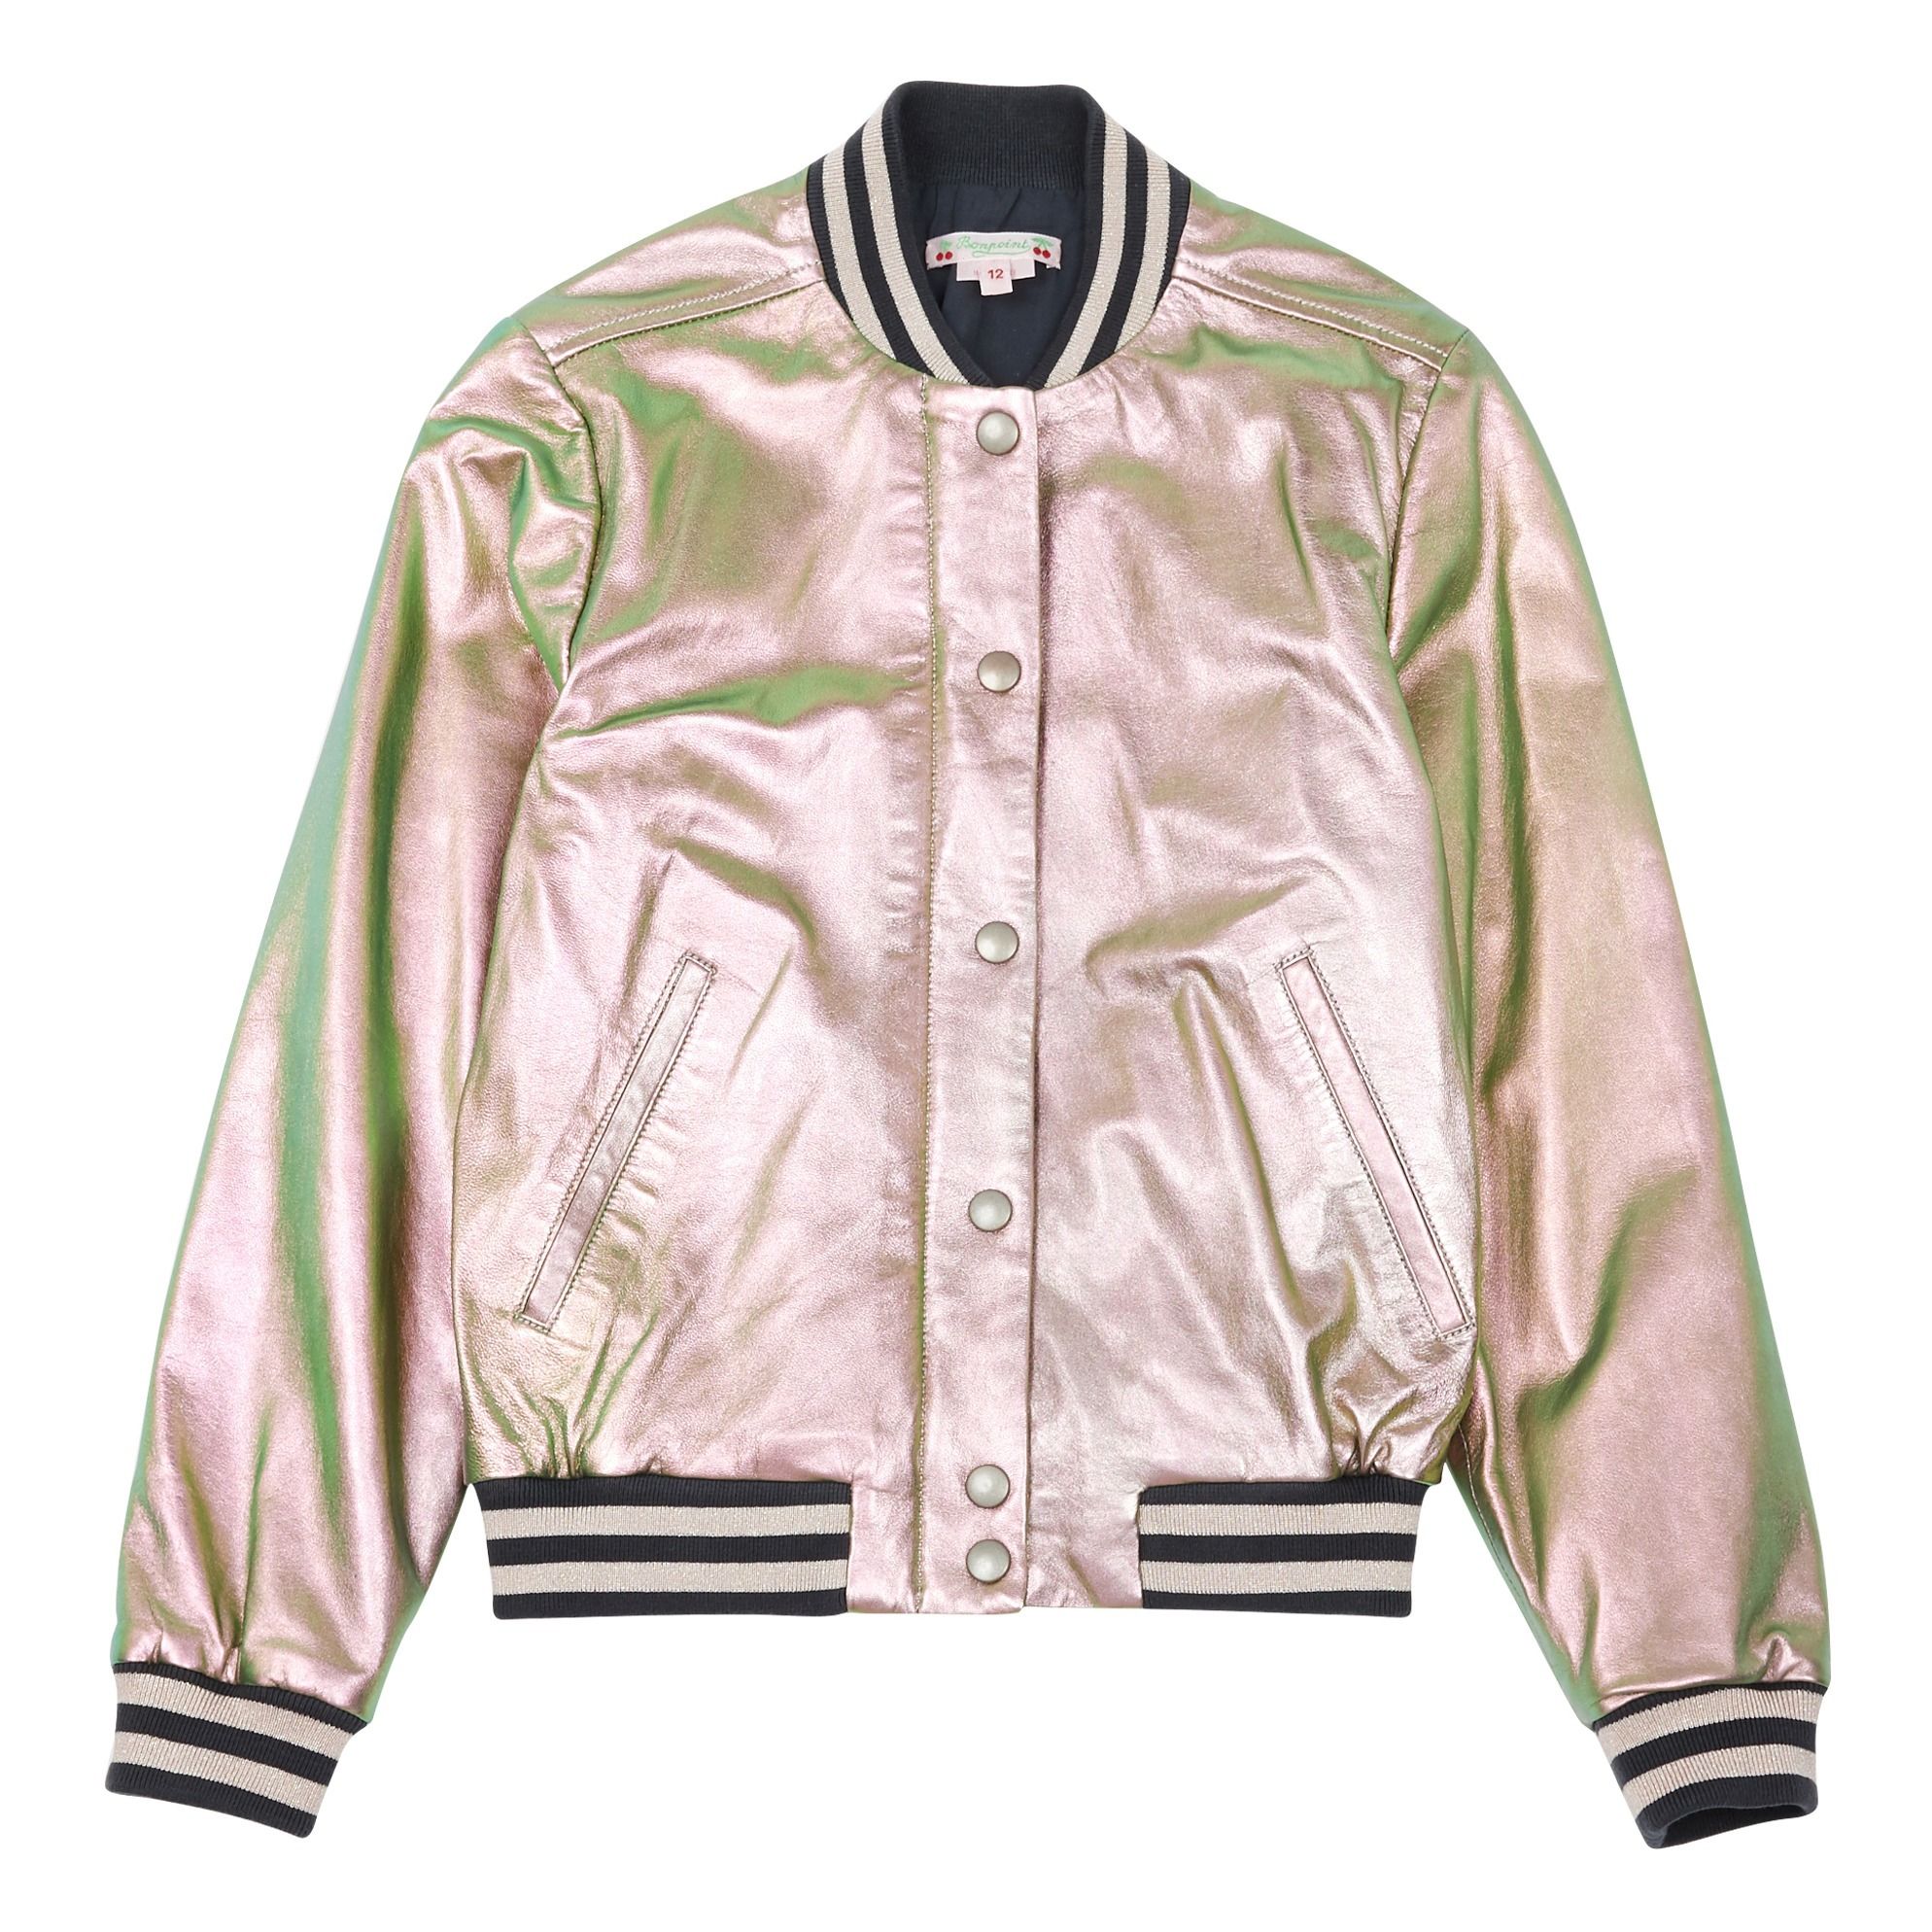 Bonpoint - Joplin leather teddy jacket - Pink